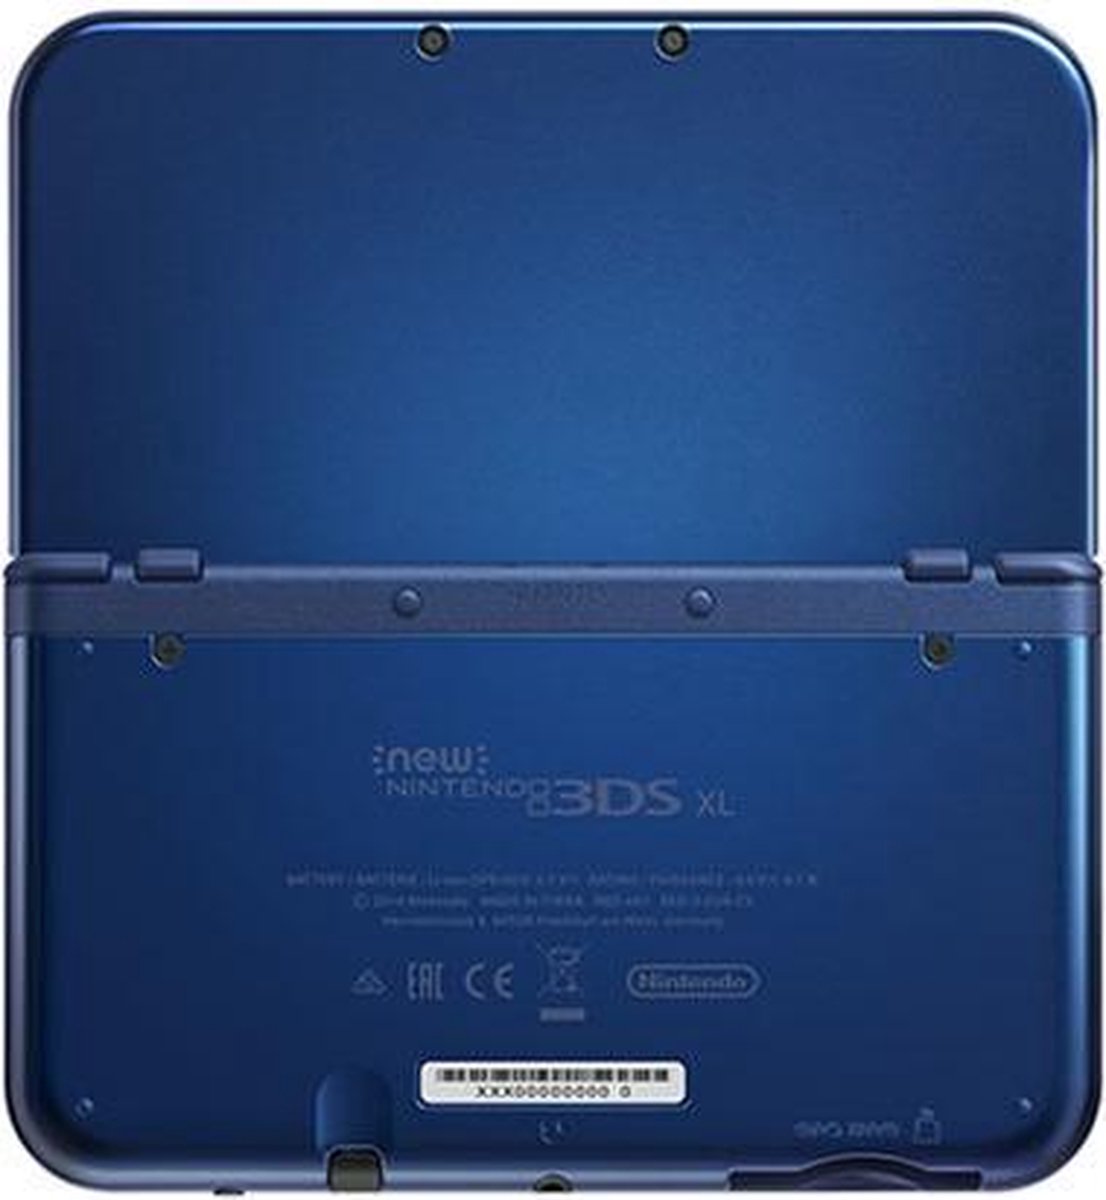 New Nintendo 3ds Xl Metallic Blue Bol Com